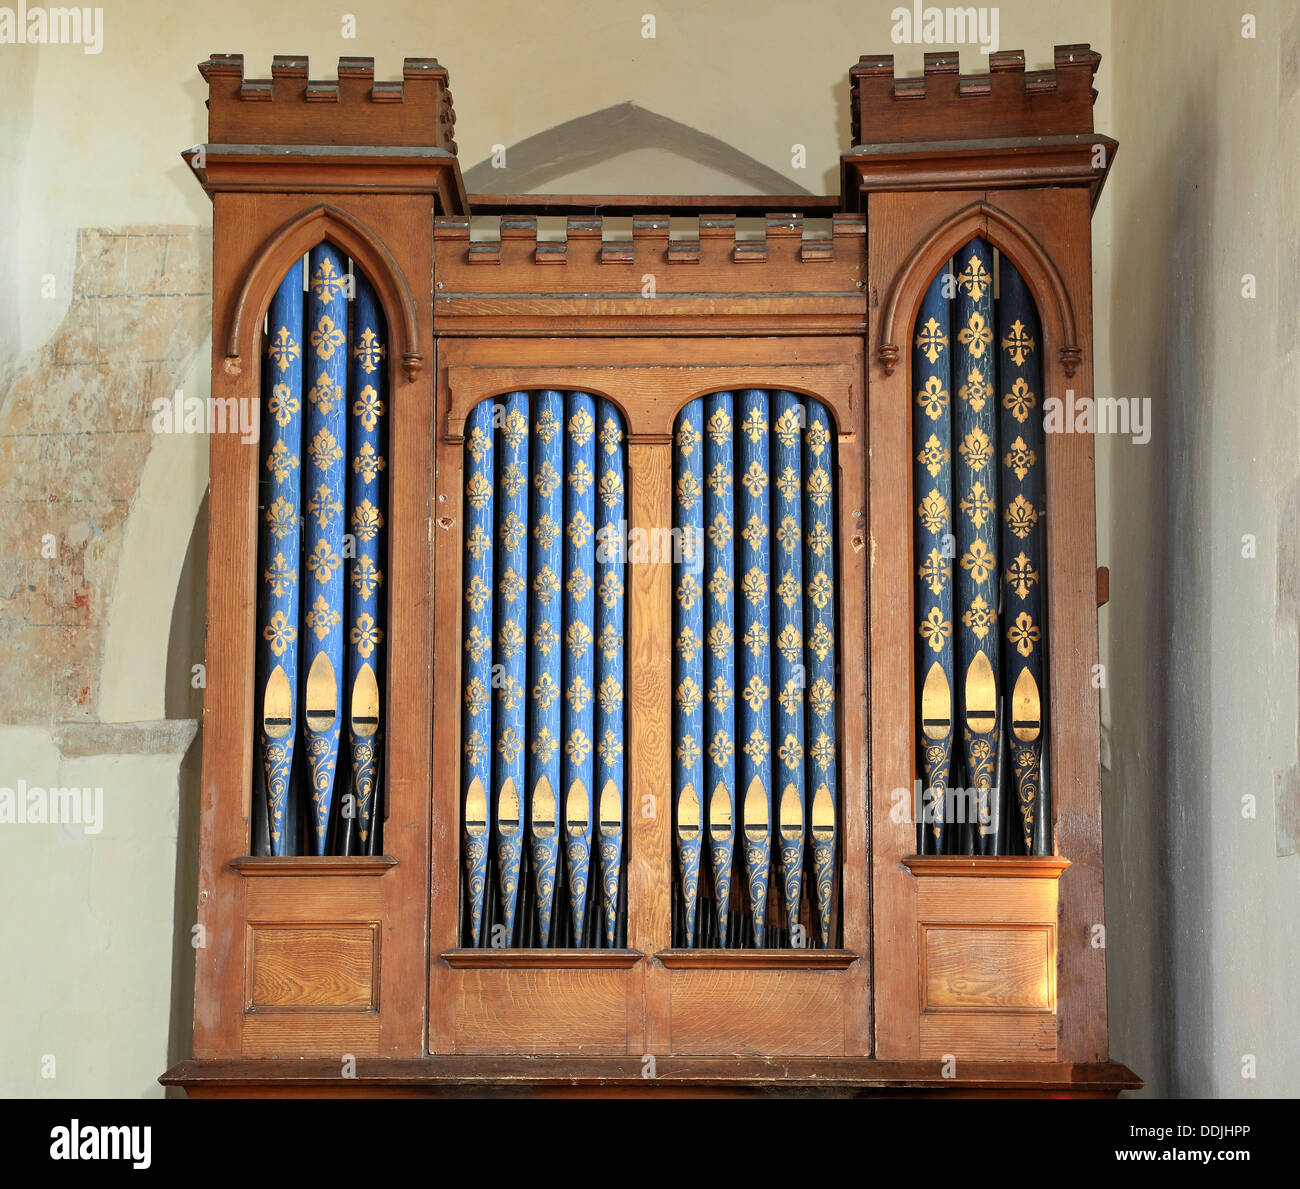 Chamber Organ dated 1823, Burnham Overy church, Norfolk, England UK music musical instrument instruments organs Stock Photo